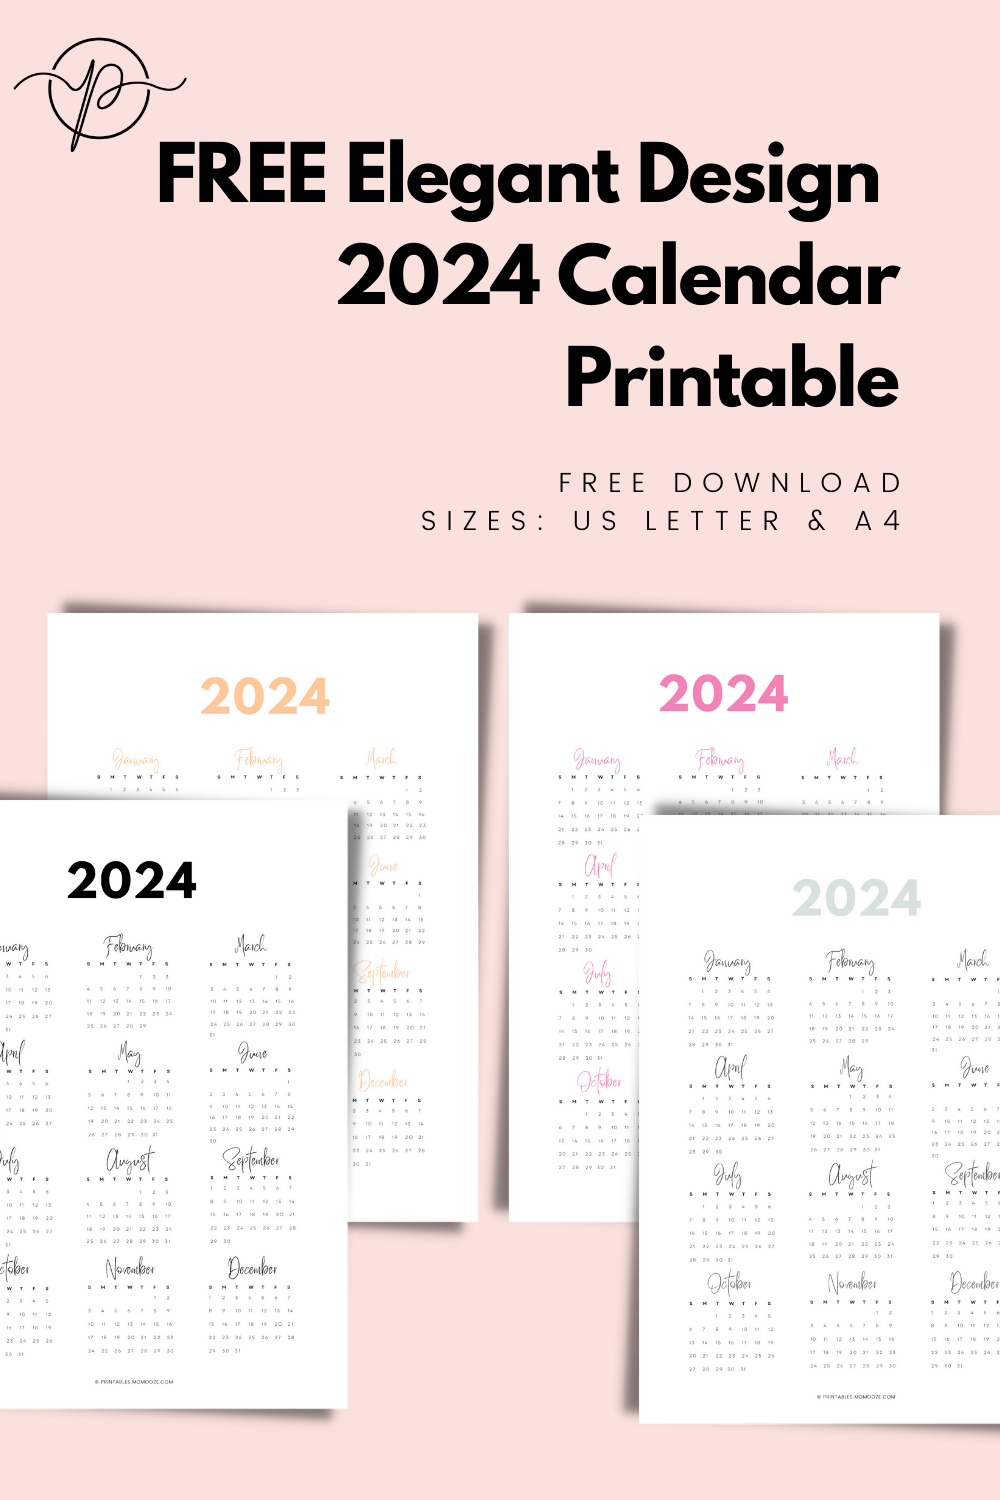 FREE 2024 Calendar Printables - 24 Gorgeous Designs